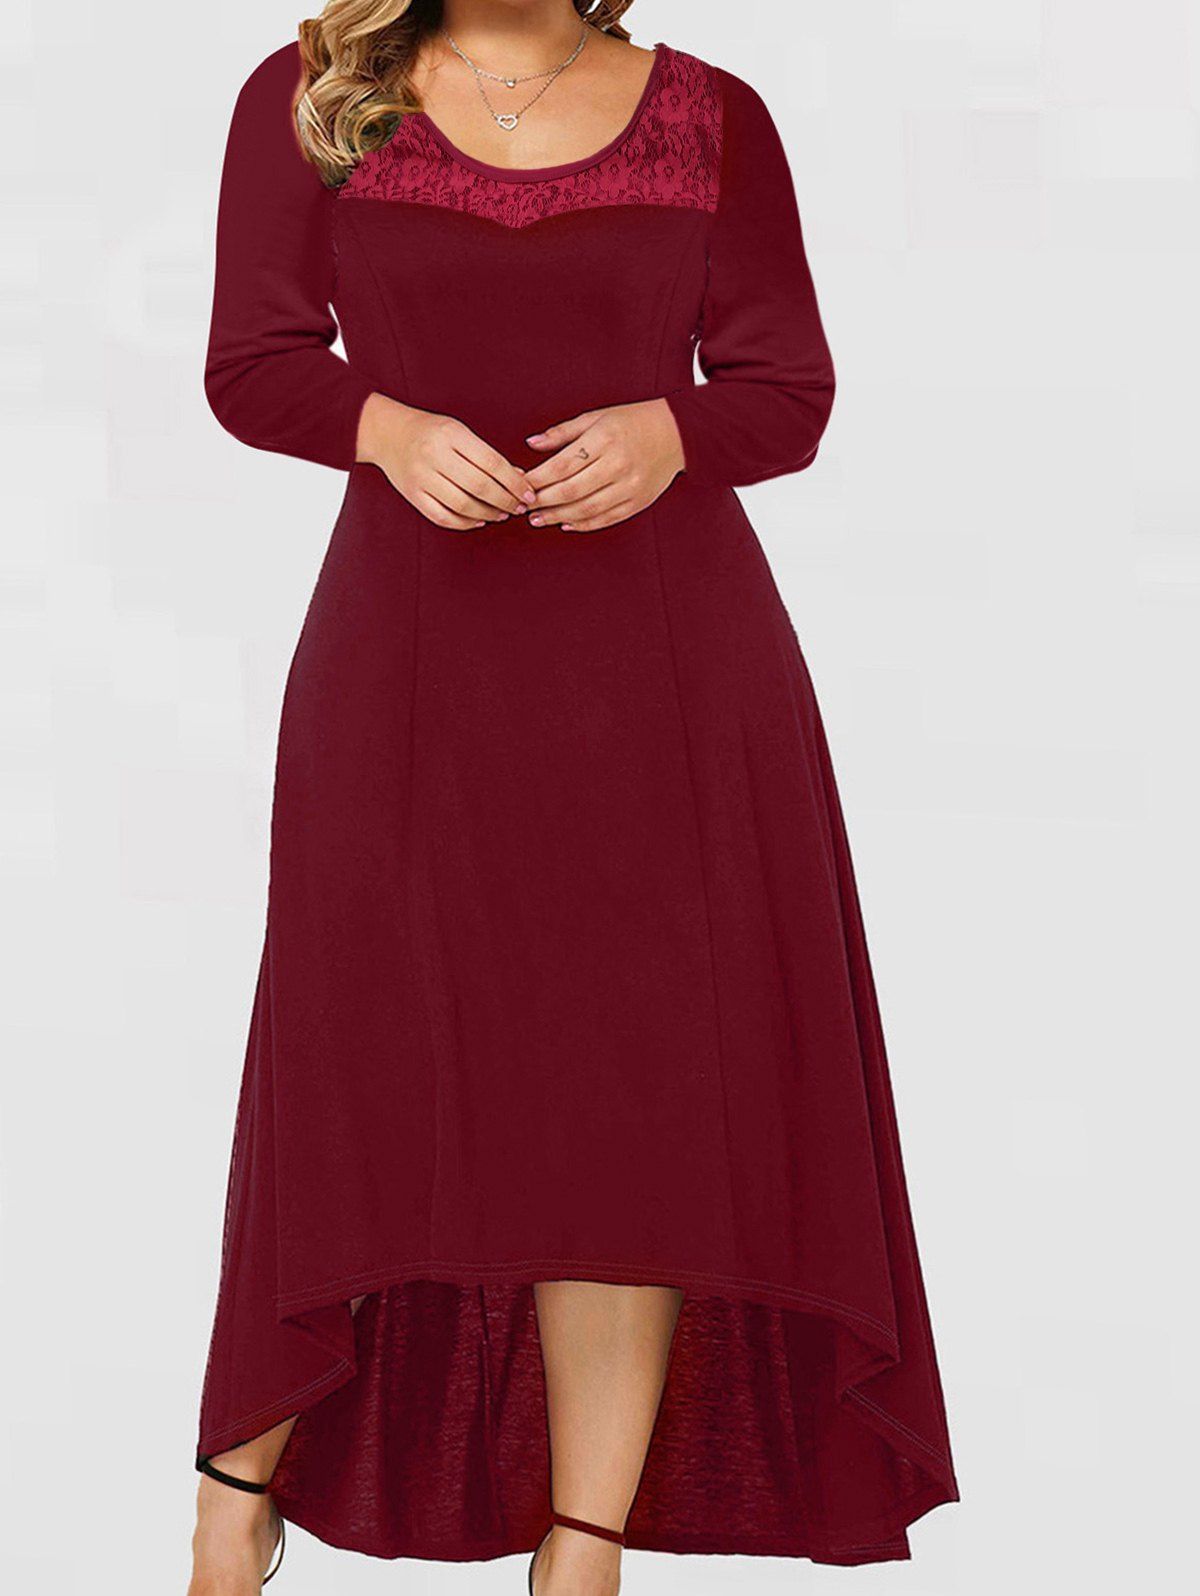 Plus Size & Curve High Low Dress Sheer Flower Lace Panel Long Sleeve Dress - DEEP RED XXXXXL